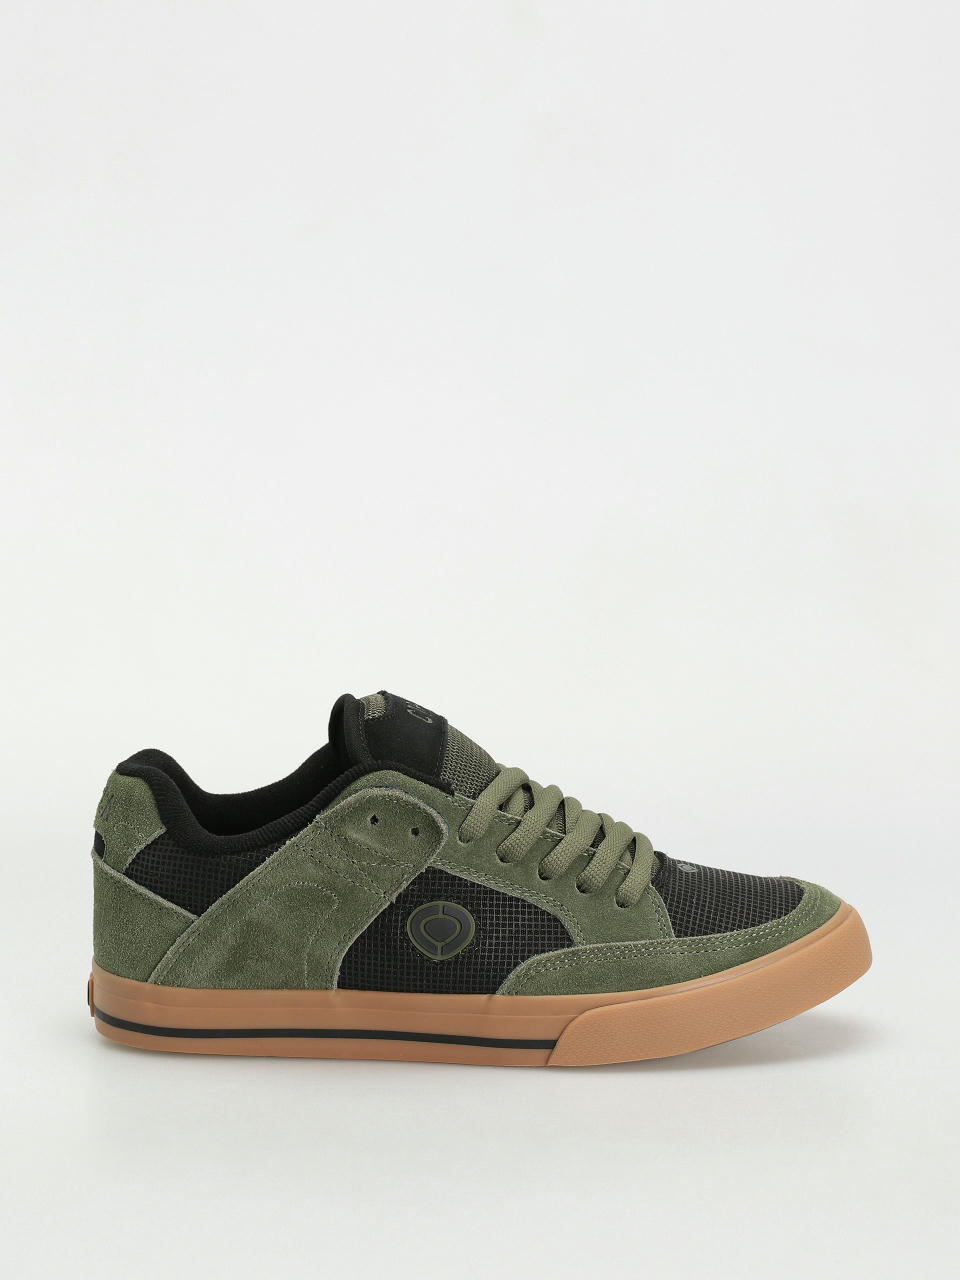 Circa 205 Vulc Se Shoes (black/military green)